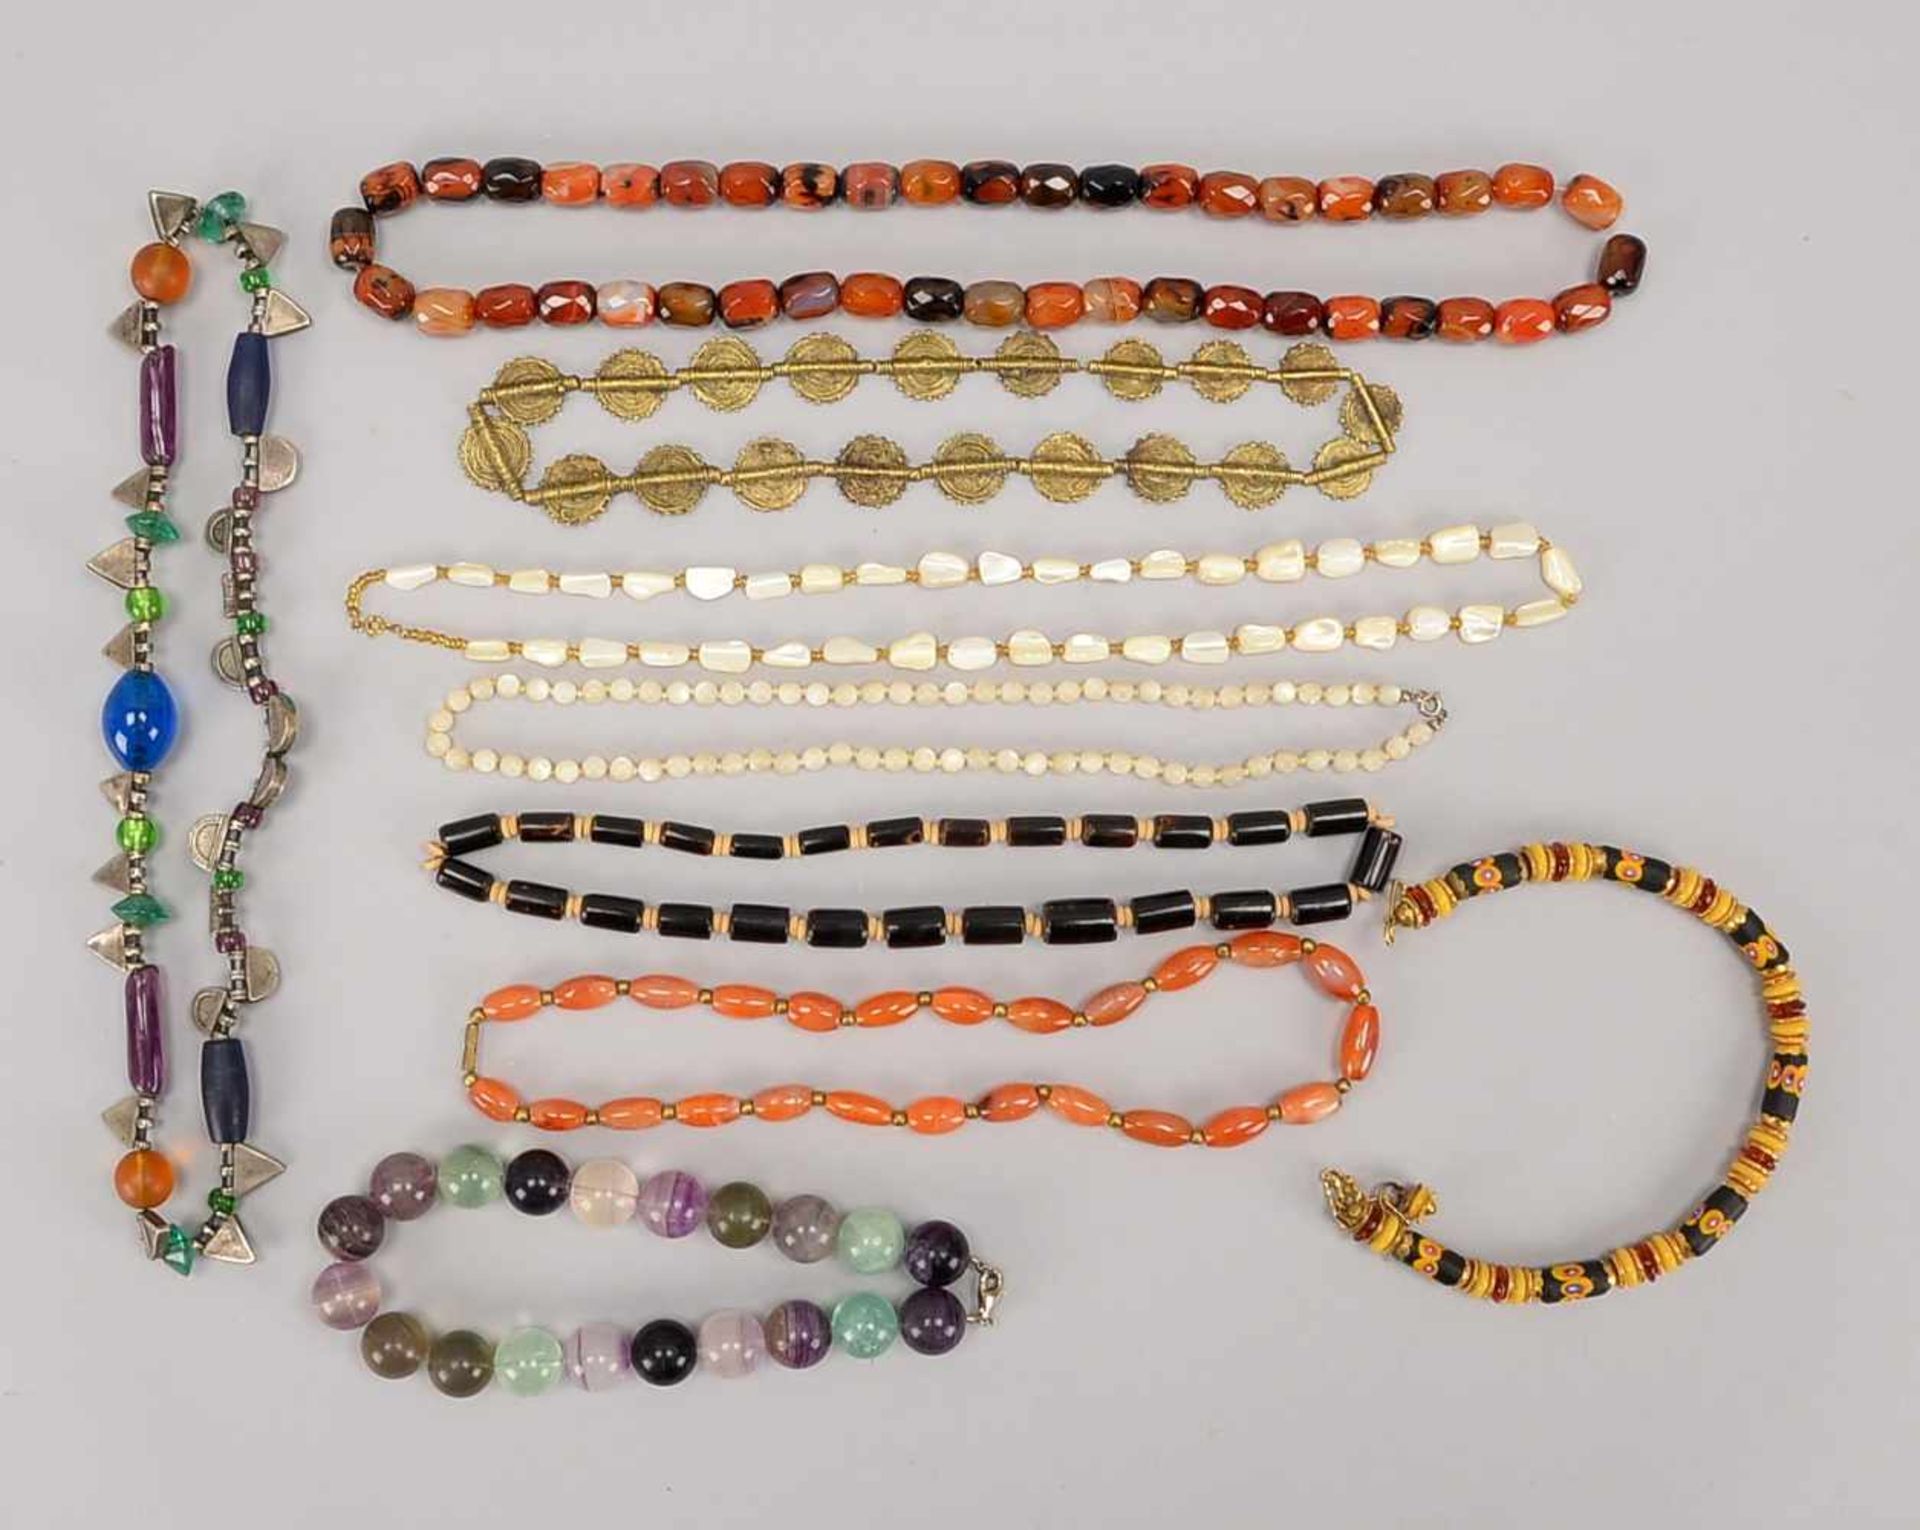 Hochwertiges Modeschmuck-Lot, 9x Halsketten, darunter: 1 Fluorit-Kette, gleichförmige Kugeln/